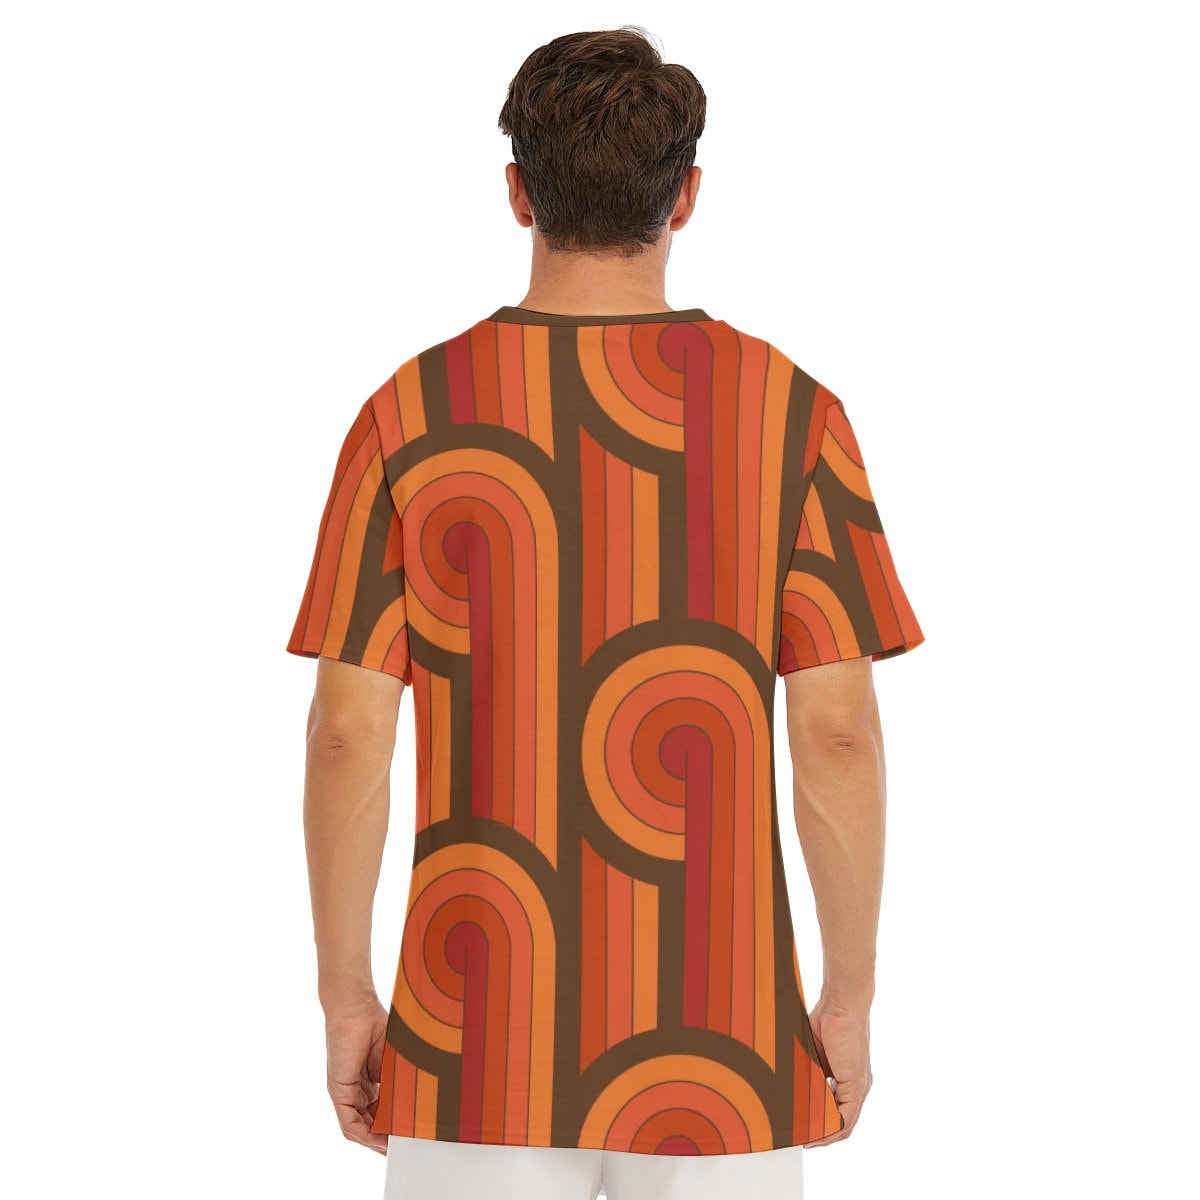 Retro T-Shirt Men, 100% Cotton T-shirt, Retro T-shirt, 60s 70s Style T-Shirt, Vintage Style Shirt, Orange Geometric Tshirt